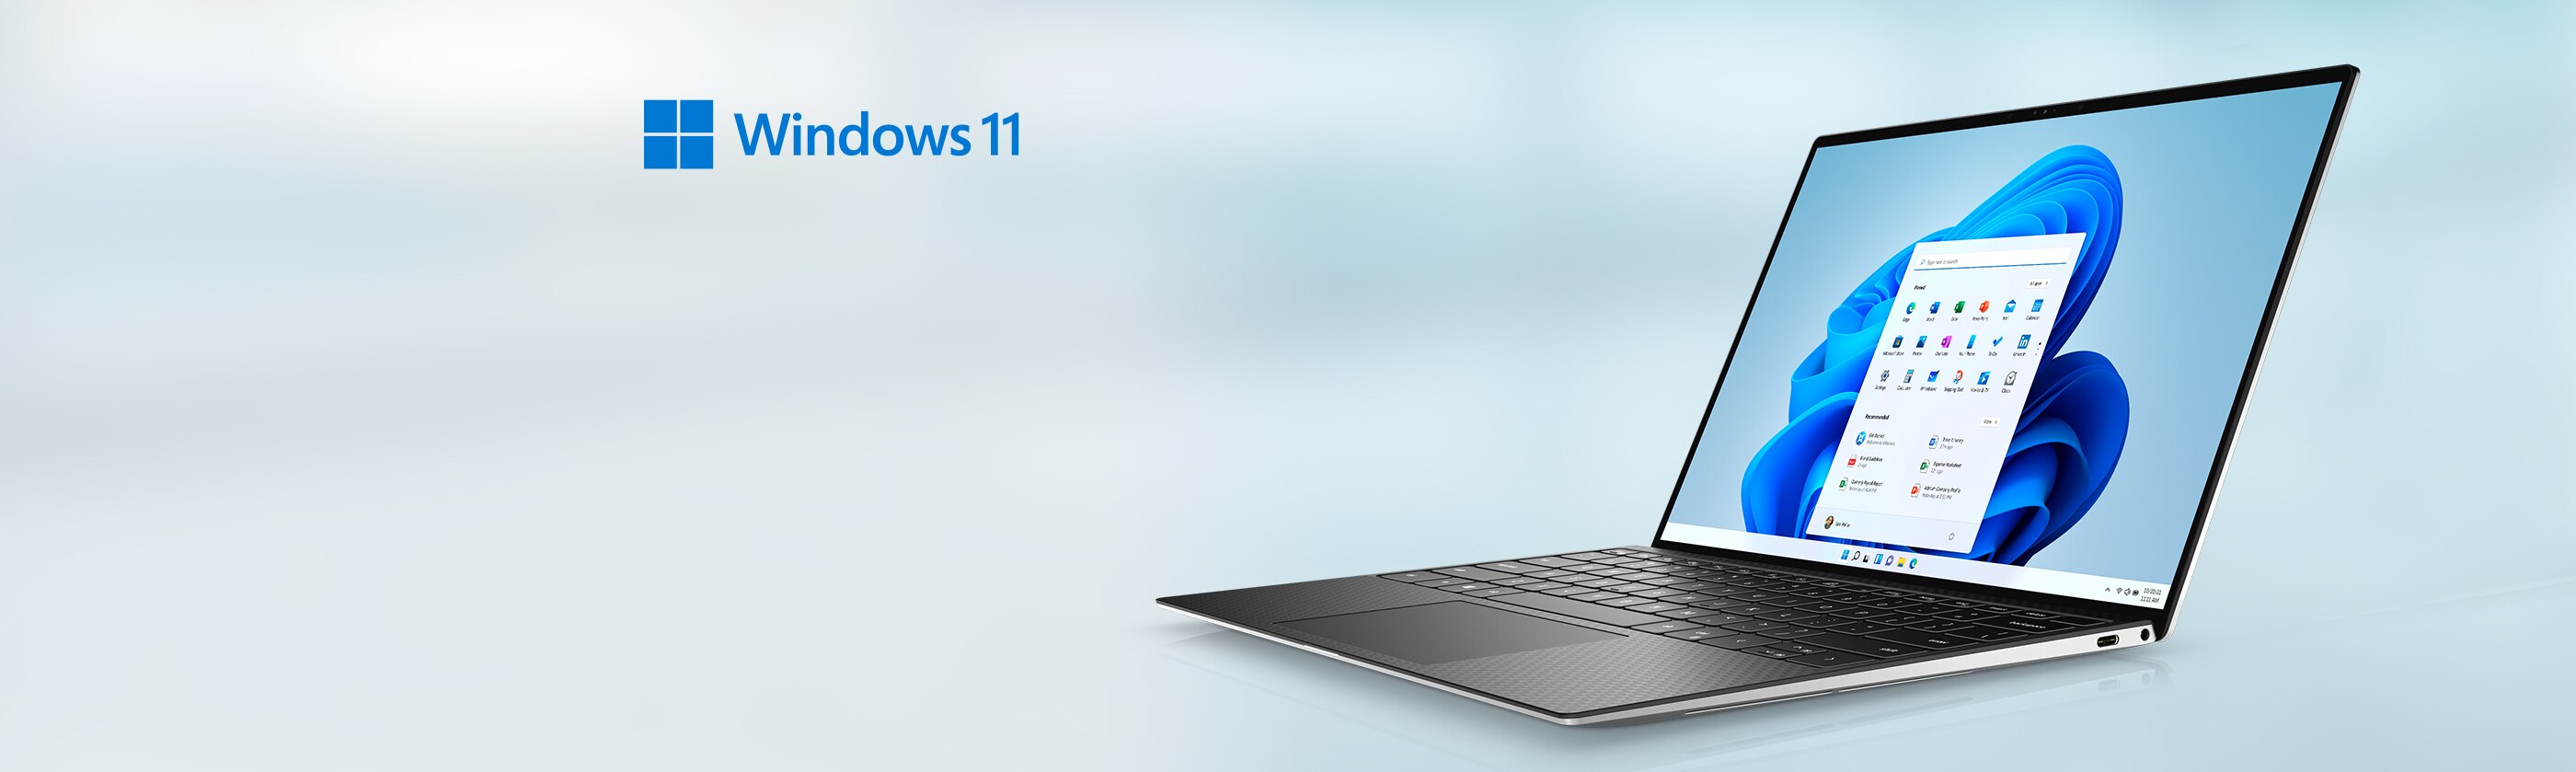 Upgrade to the Windows 11 | Dell USA